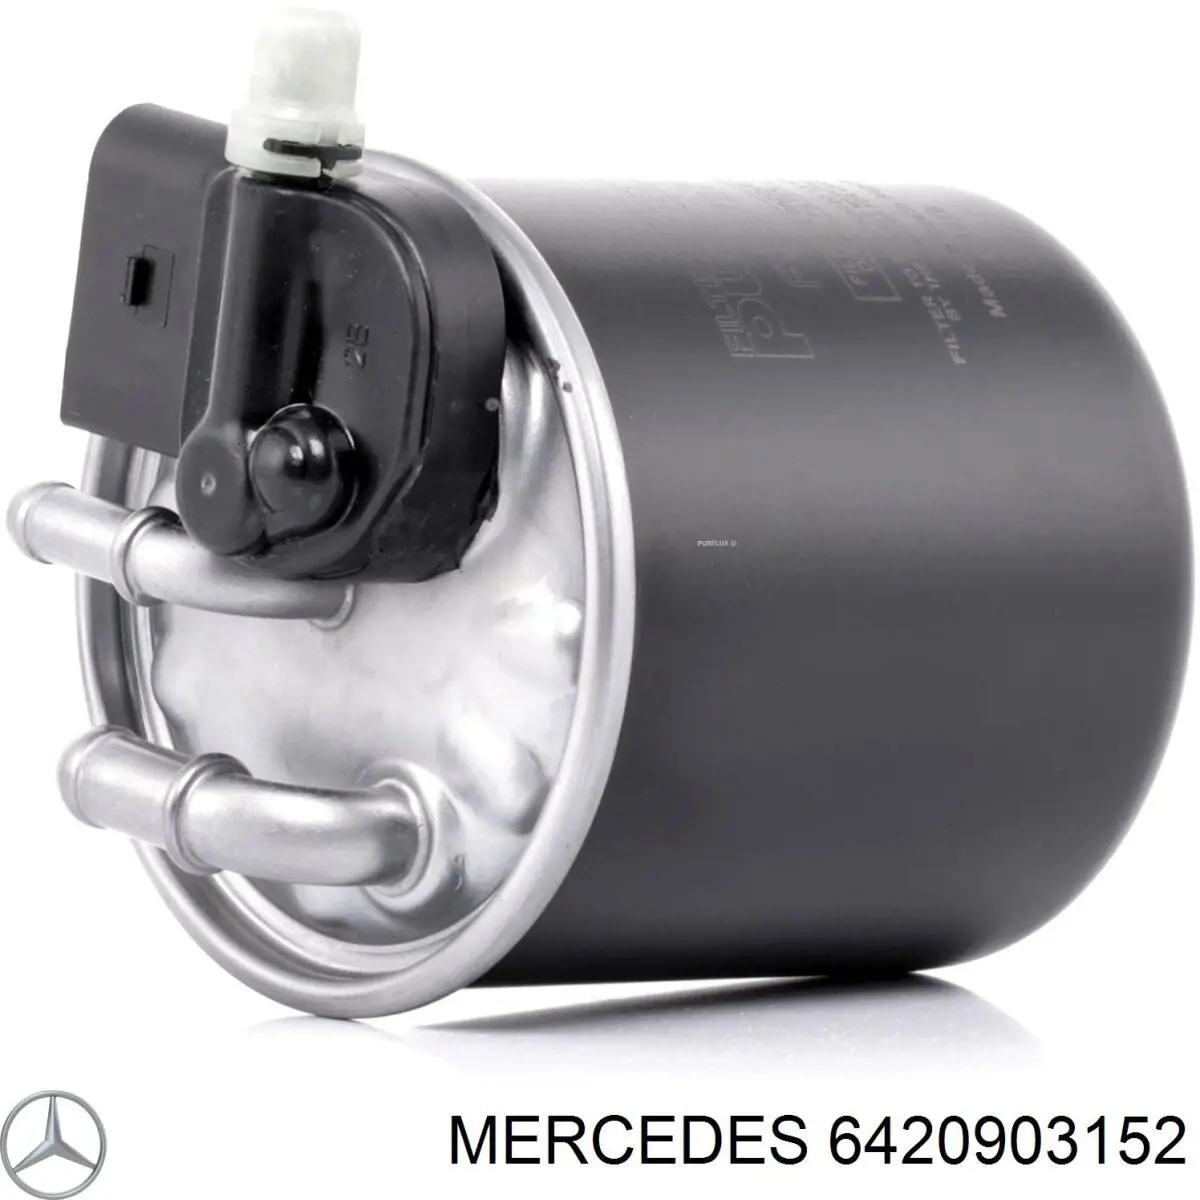 6420903152 Mercedes filtro combustible